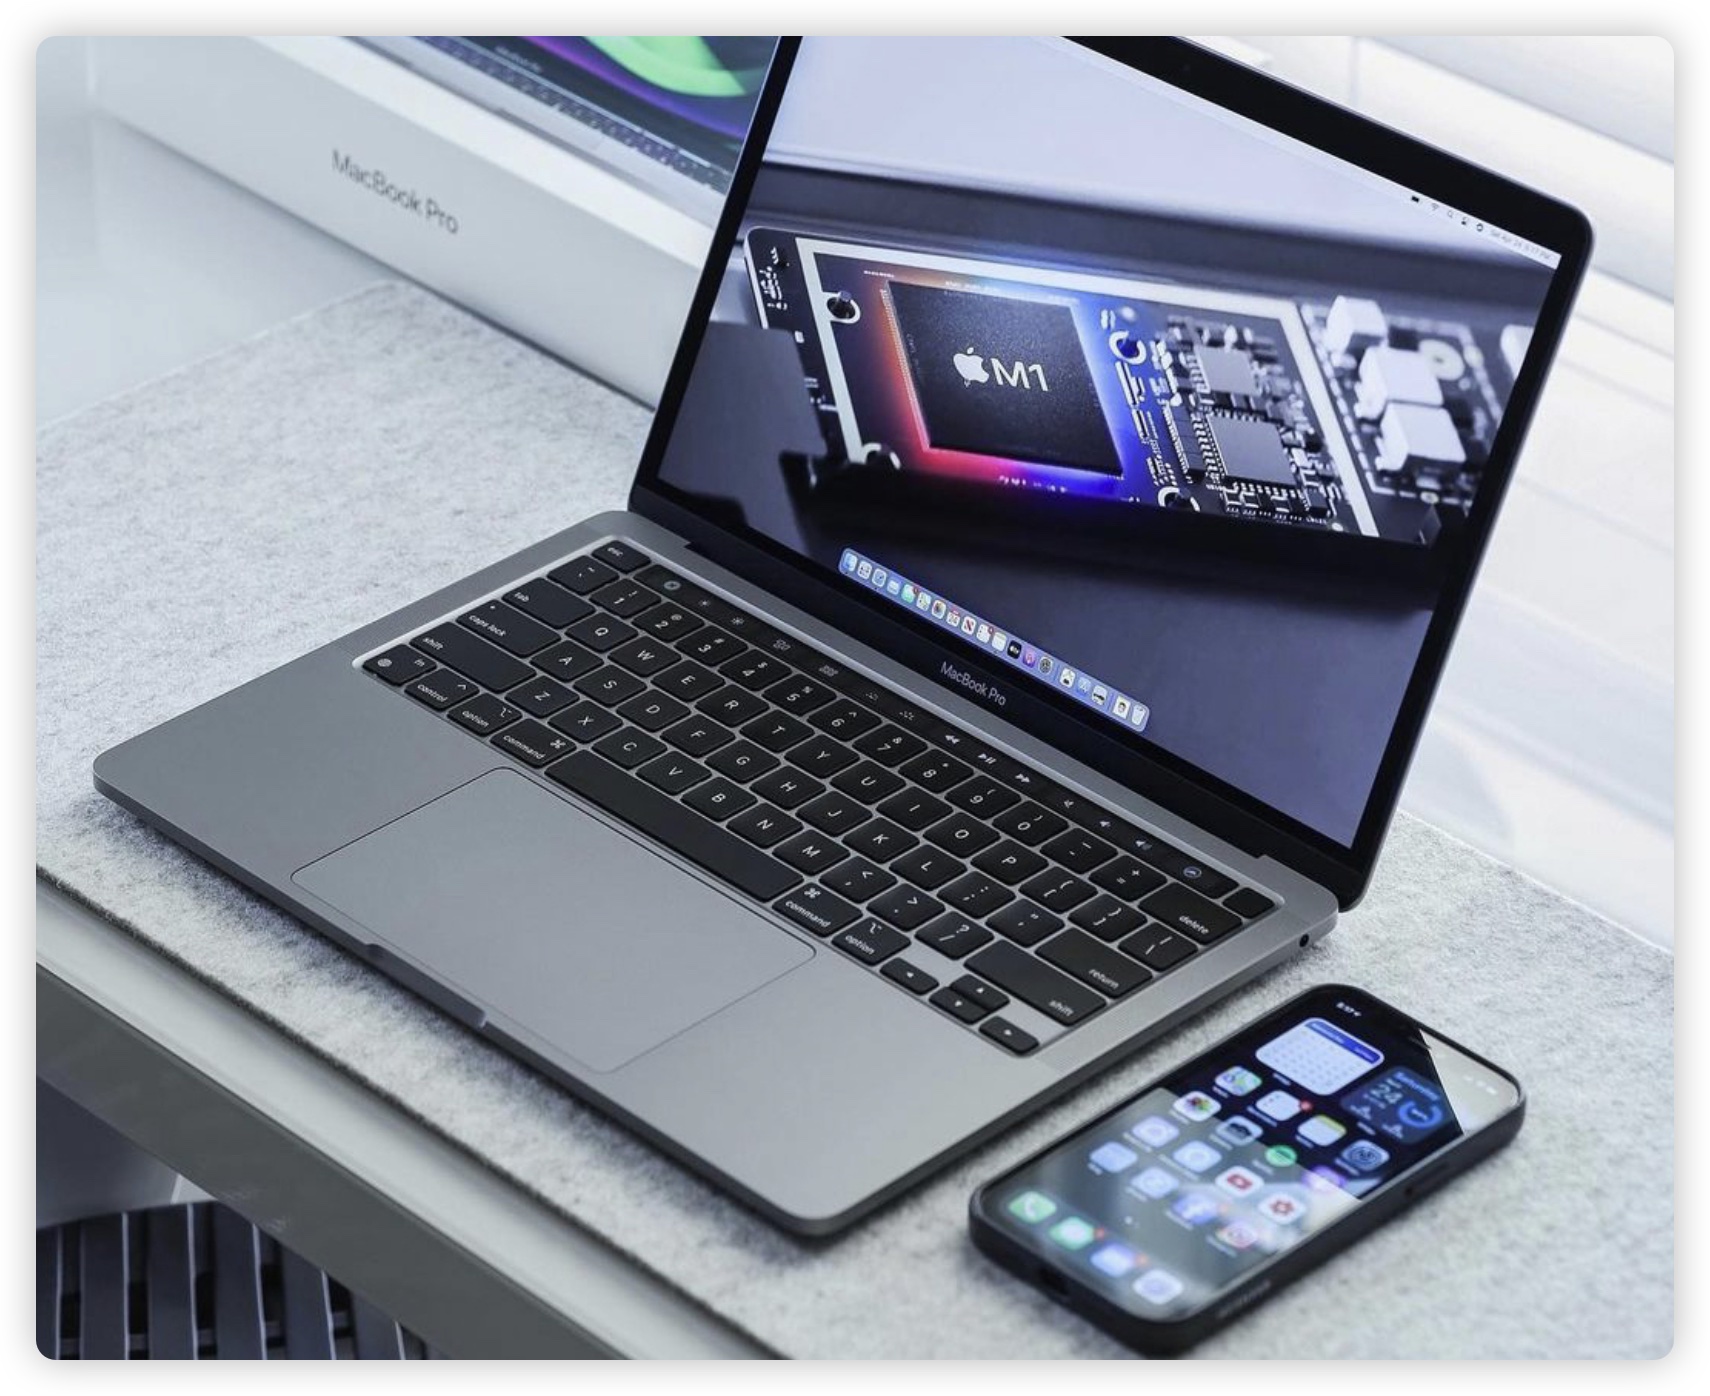 MacBook Pro LTE 晶片